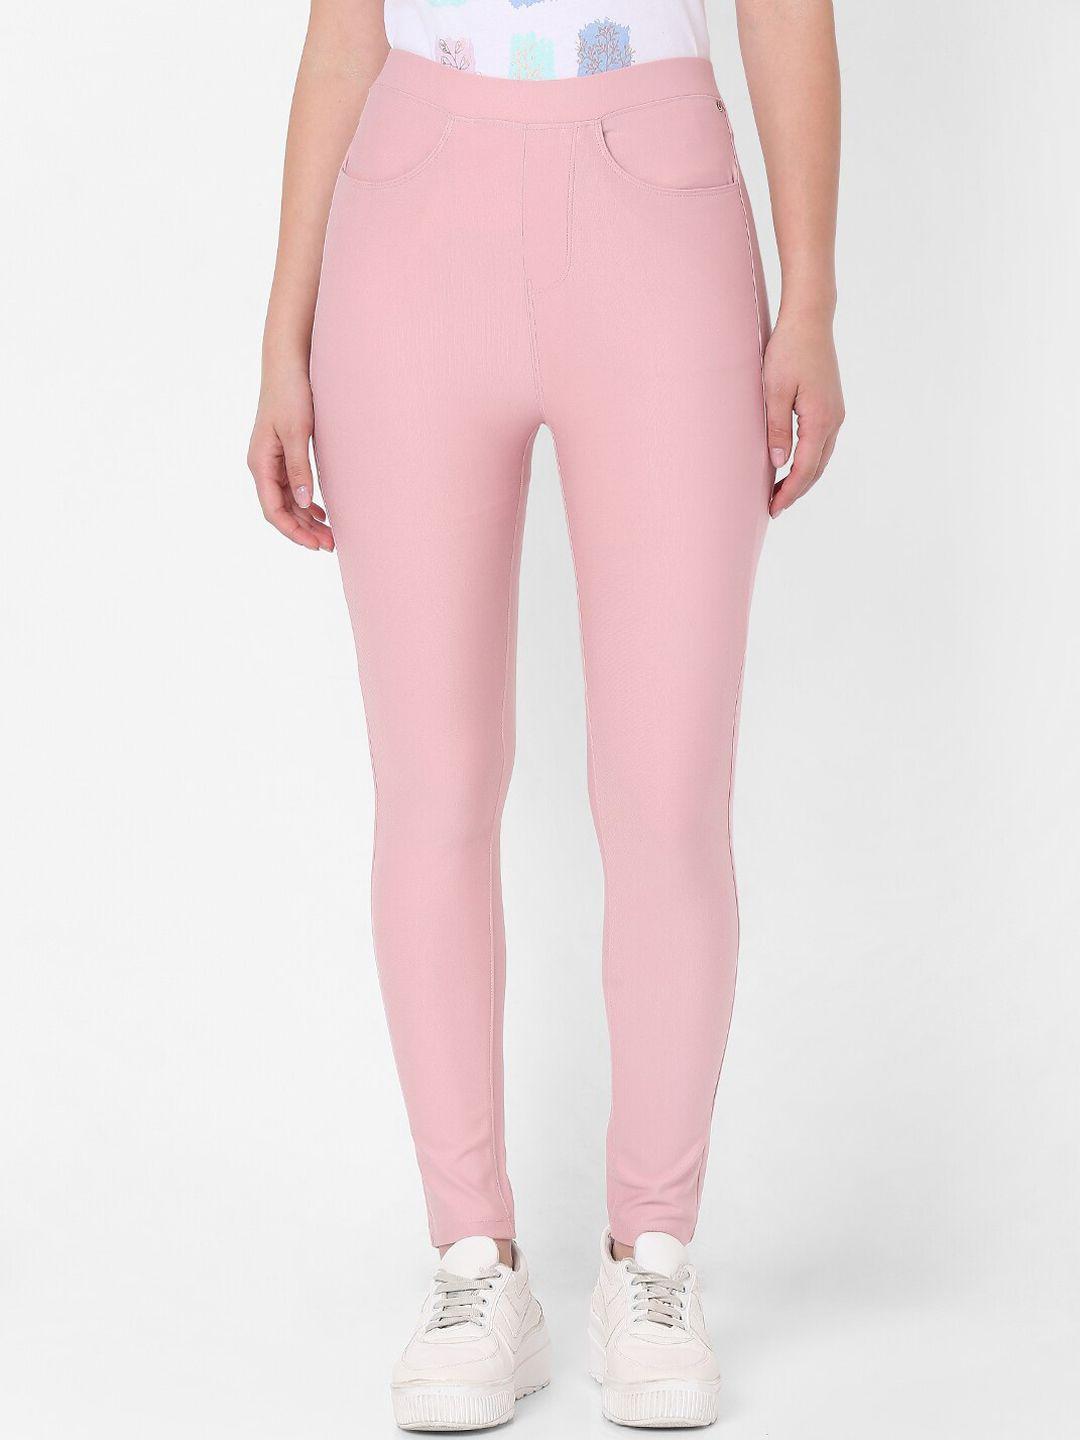 spykar-women-pink-slim-fit-track-pants